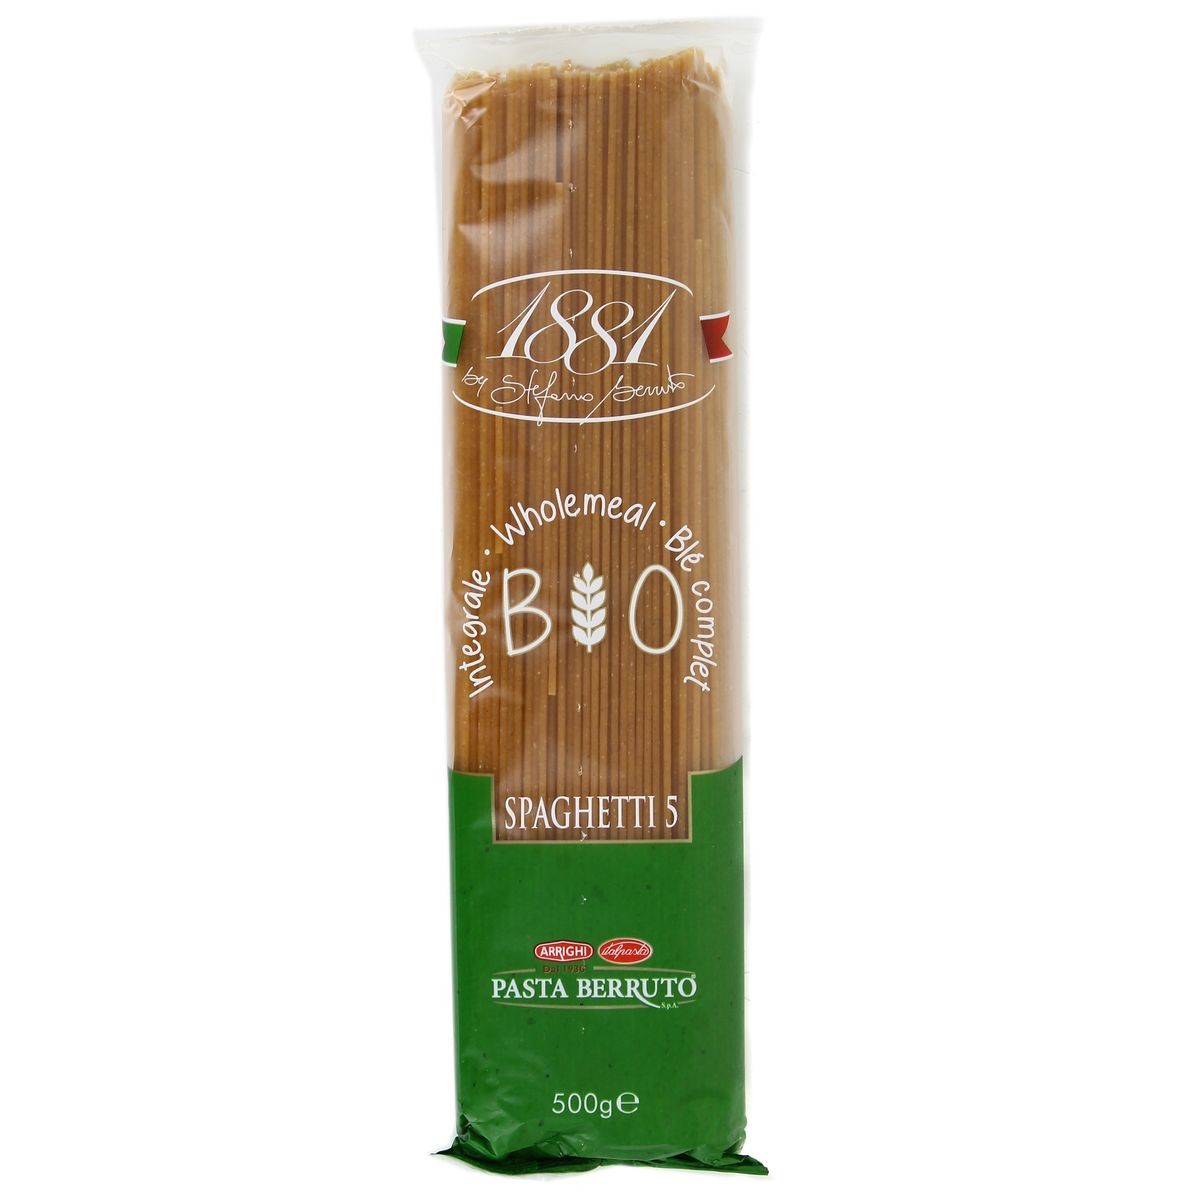 Spaghetti 5 Organic &amp; Integral 1881 Stefano Berruto 500g